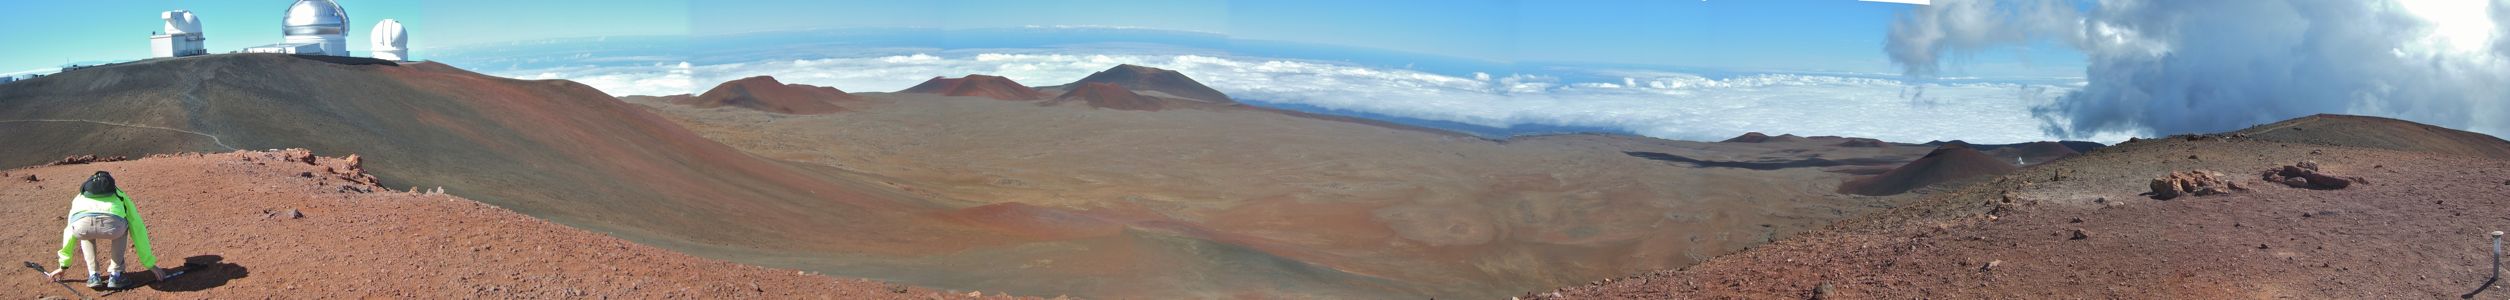 Mauna Kea Summit Panorama 3 - 10/2012